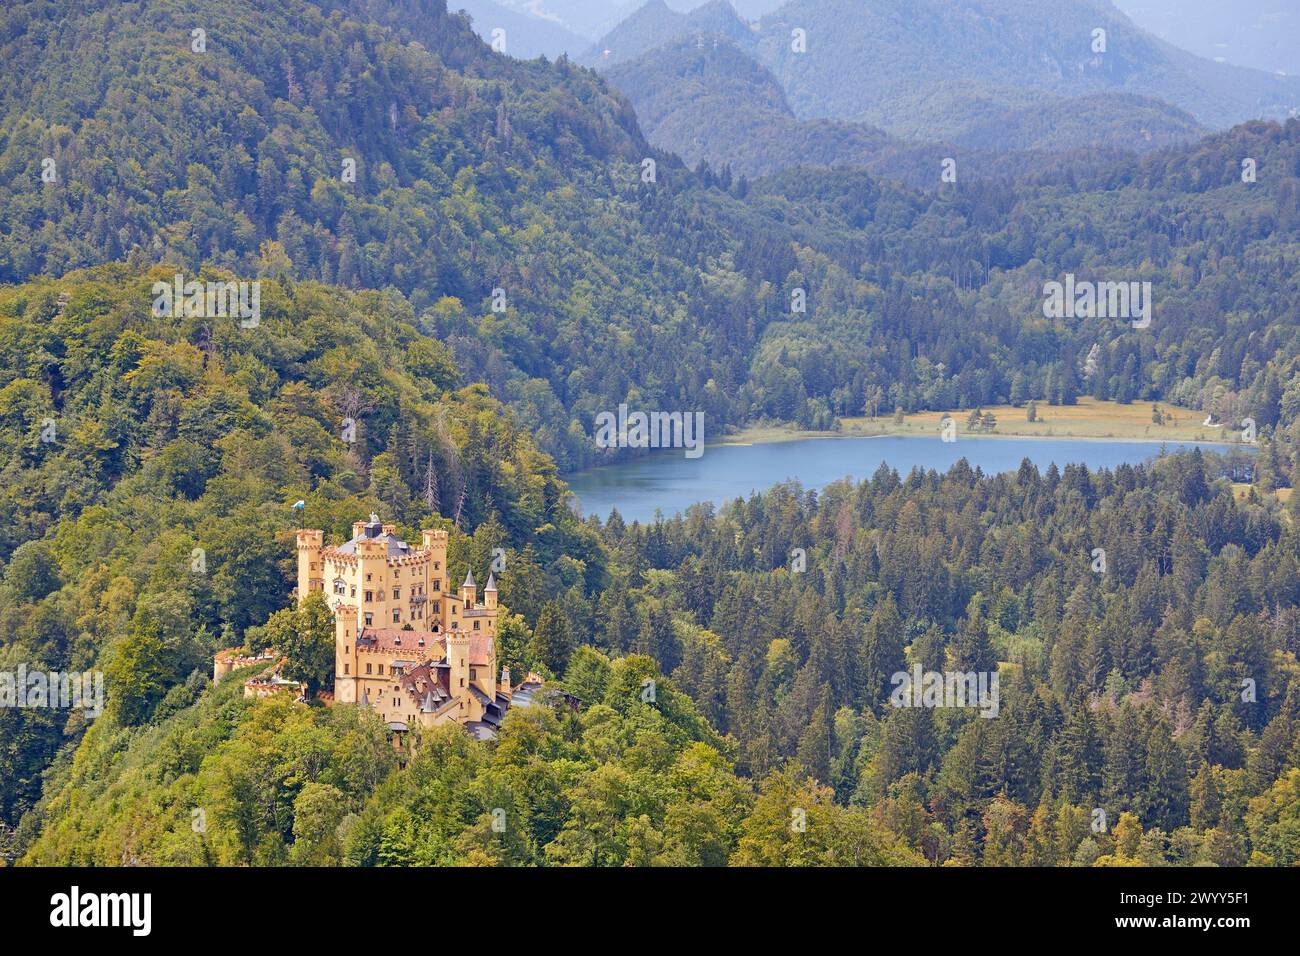 Schloss Hohenschwangau castle in Bavaria, Germany Stock Photo